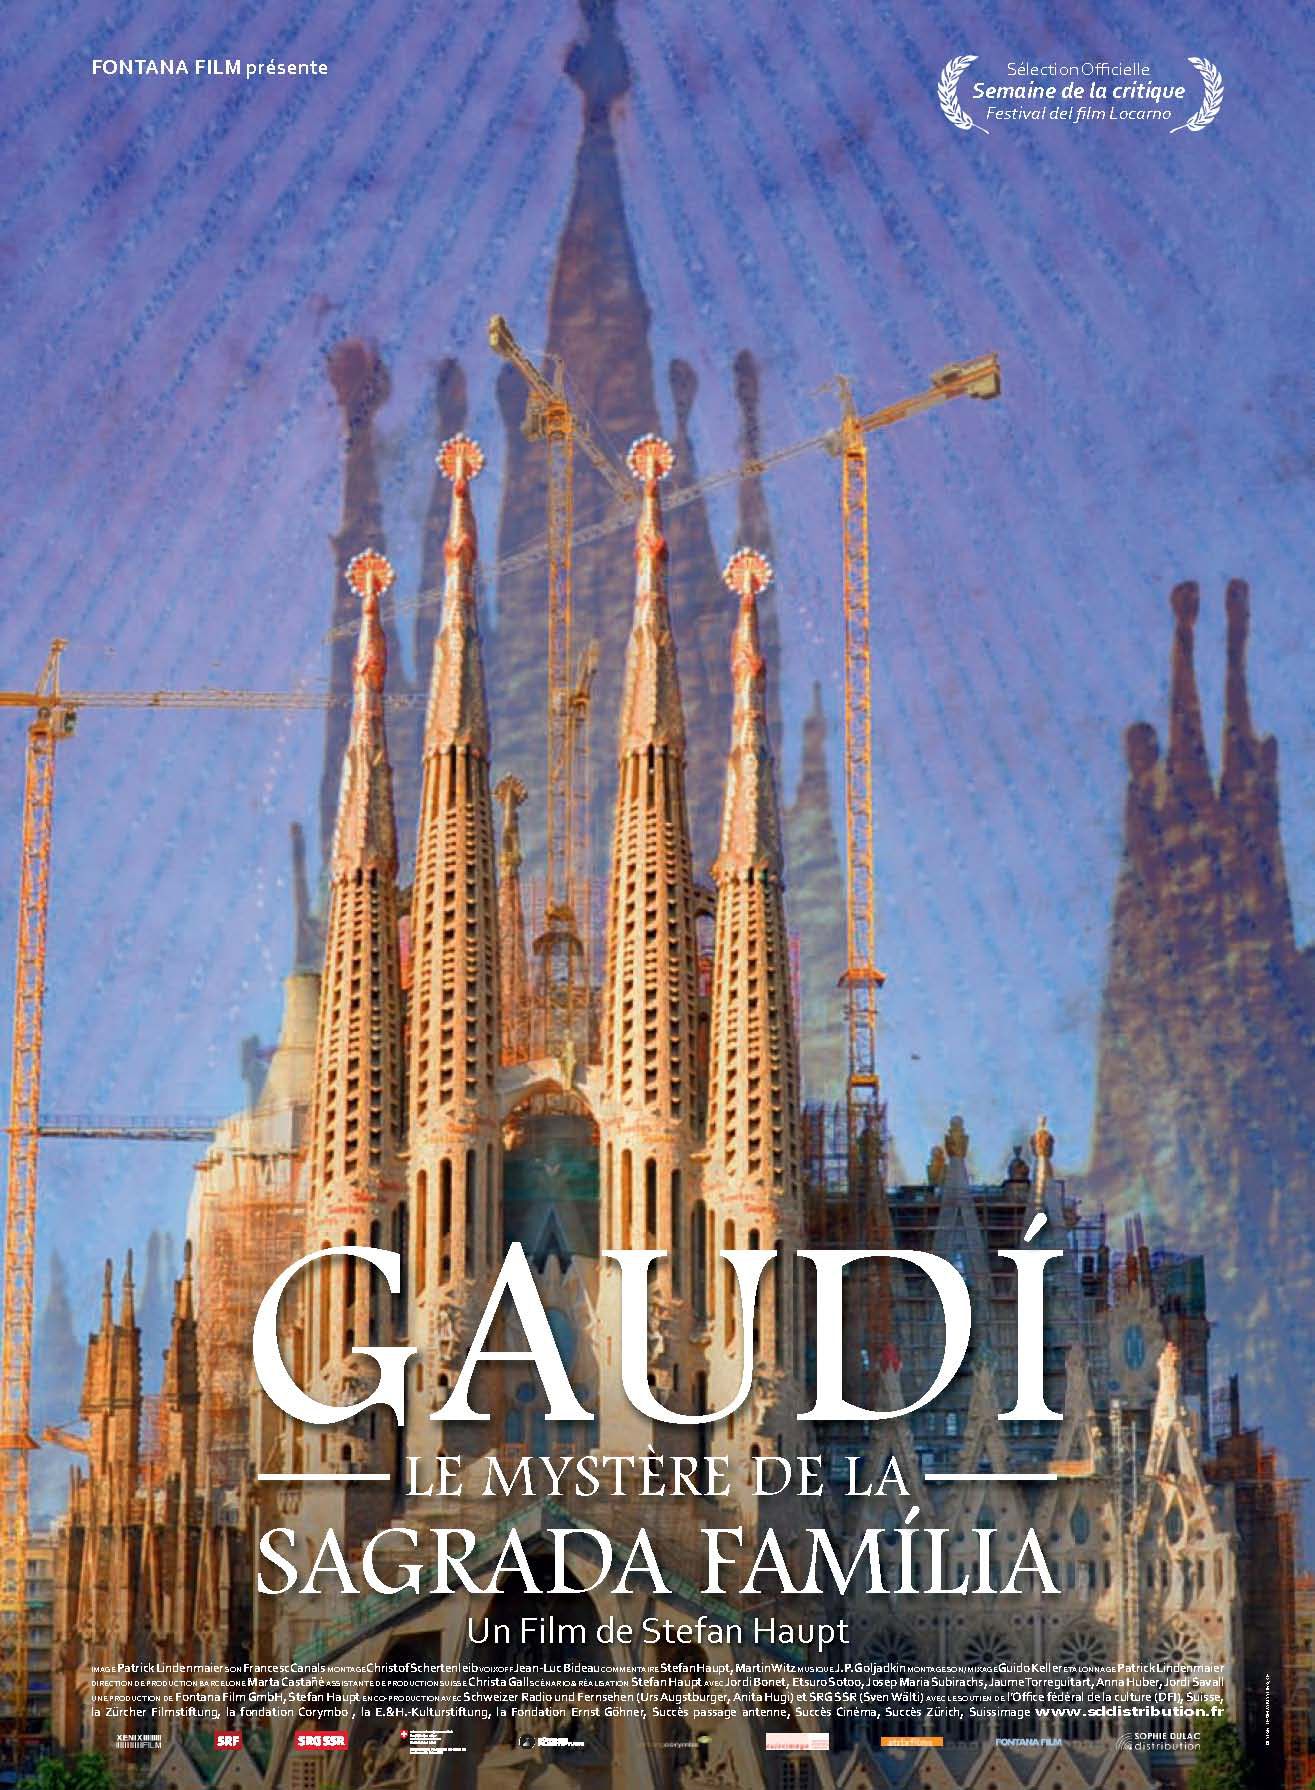 Gaudi, Le Mystère de la Sagrada Familia - Documentaire (2014) streaming VF gratuit complet